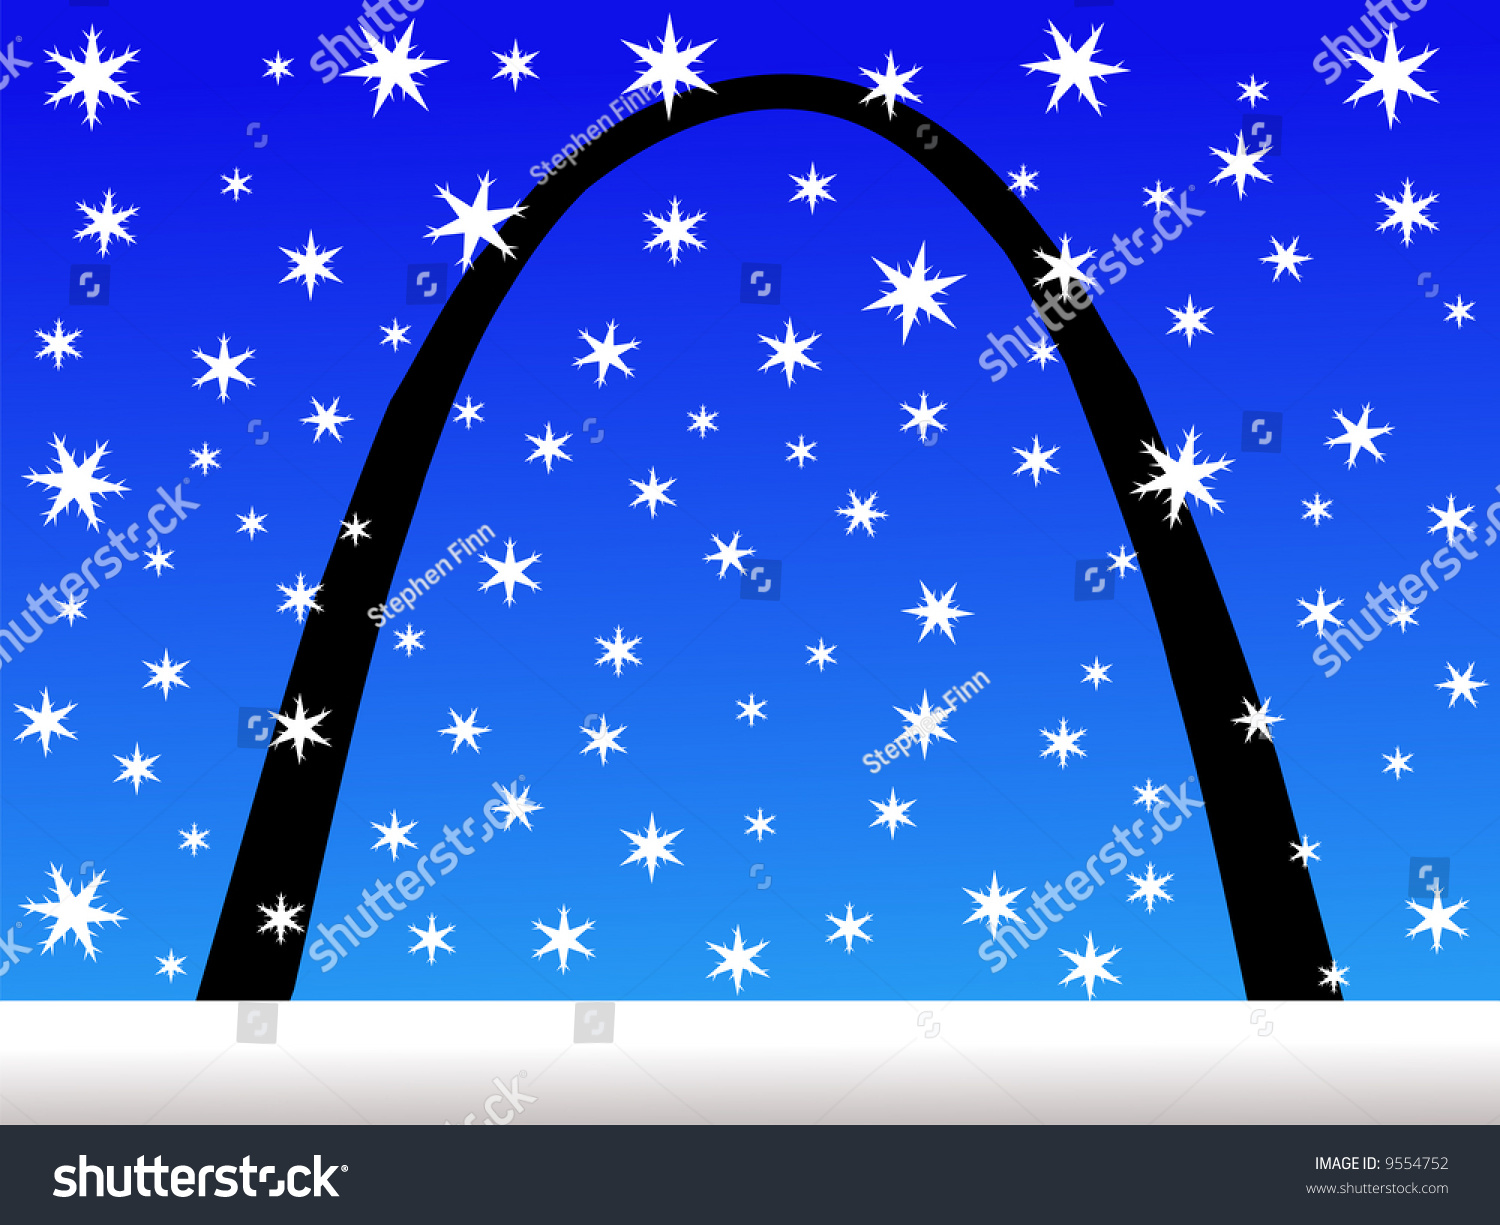 Gateway Arch St Louis In Winter With Falling Snow Jpg Stock Photo 9554752 : Shutterstock